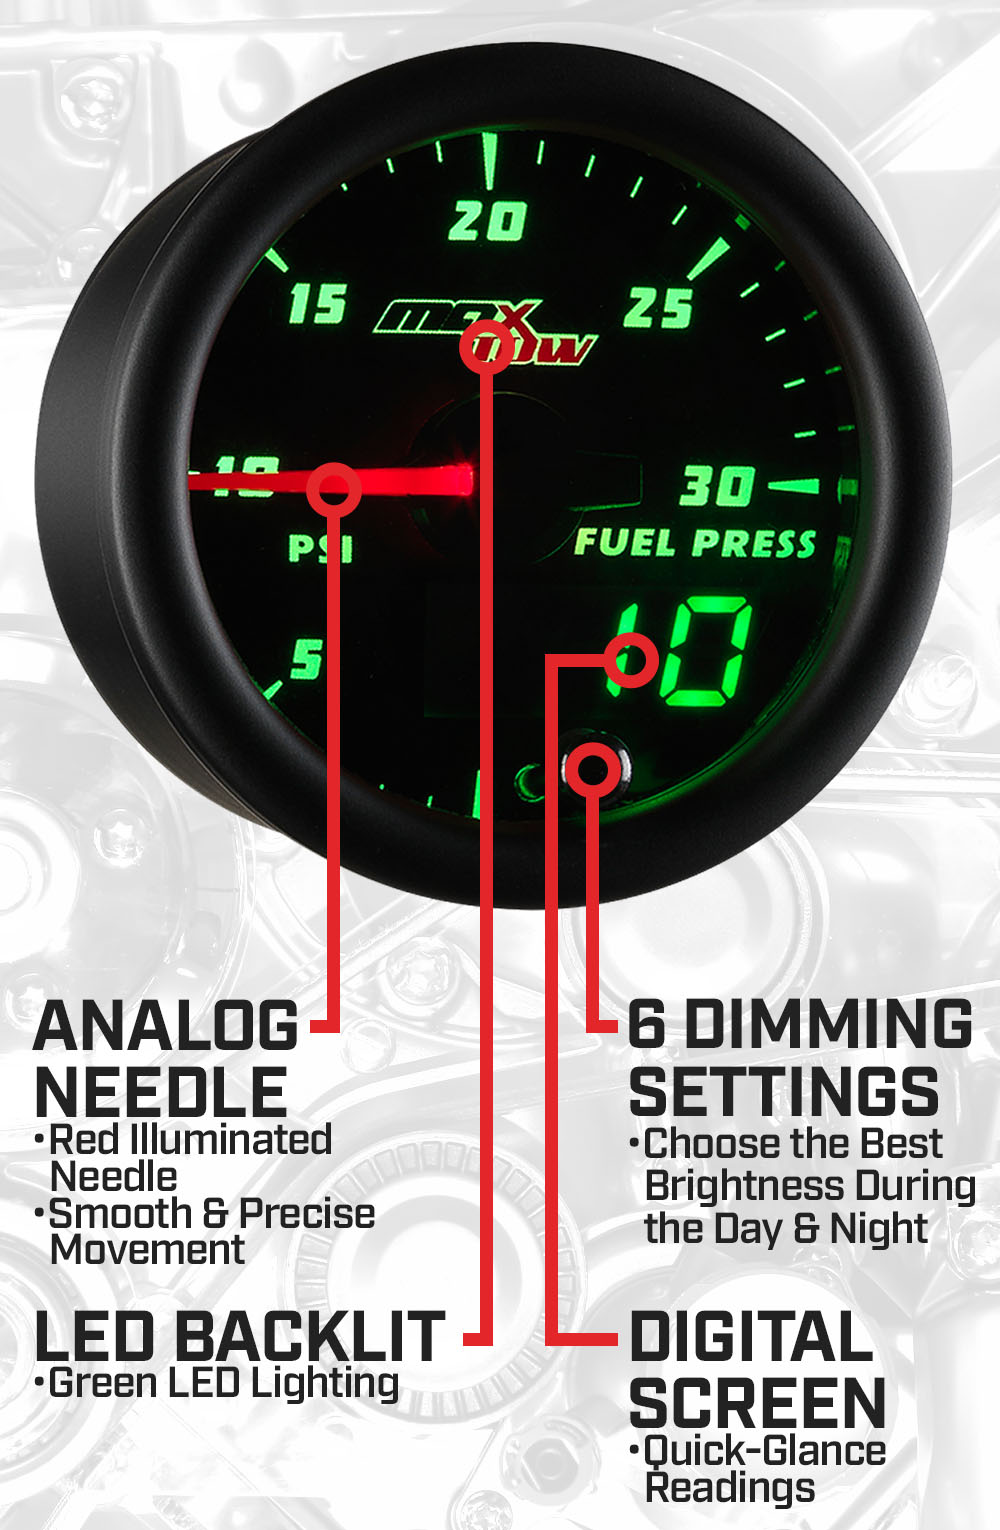 Black & Green Double Vision 30 PSI Fuel Pressure Gauge Features